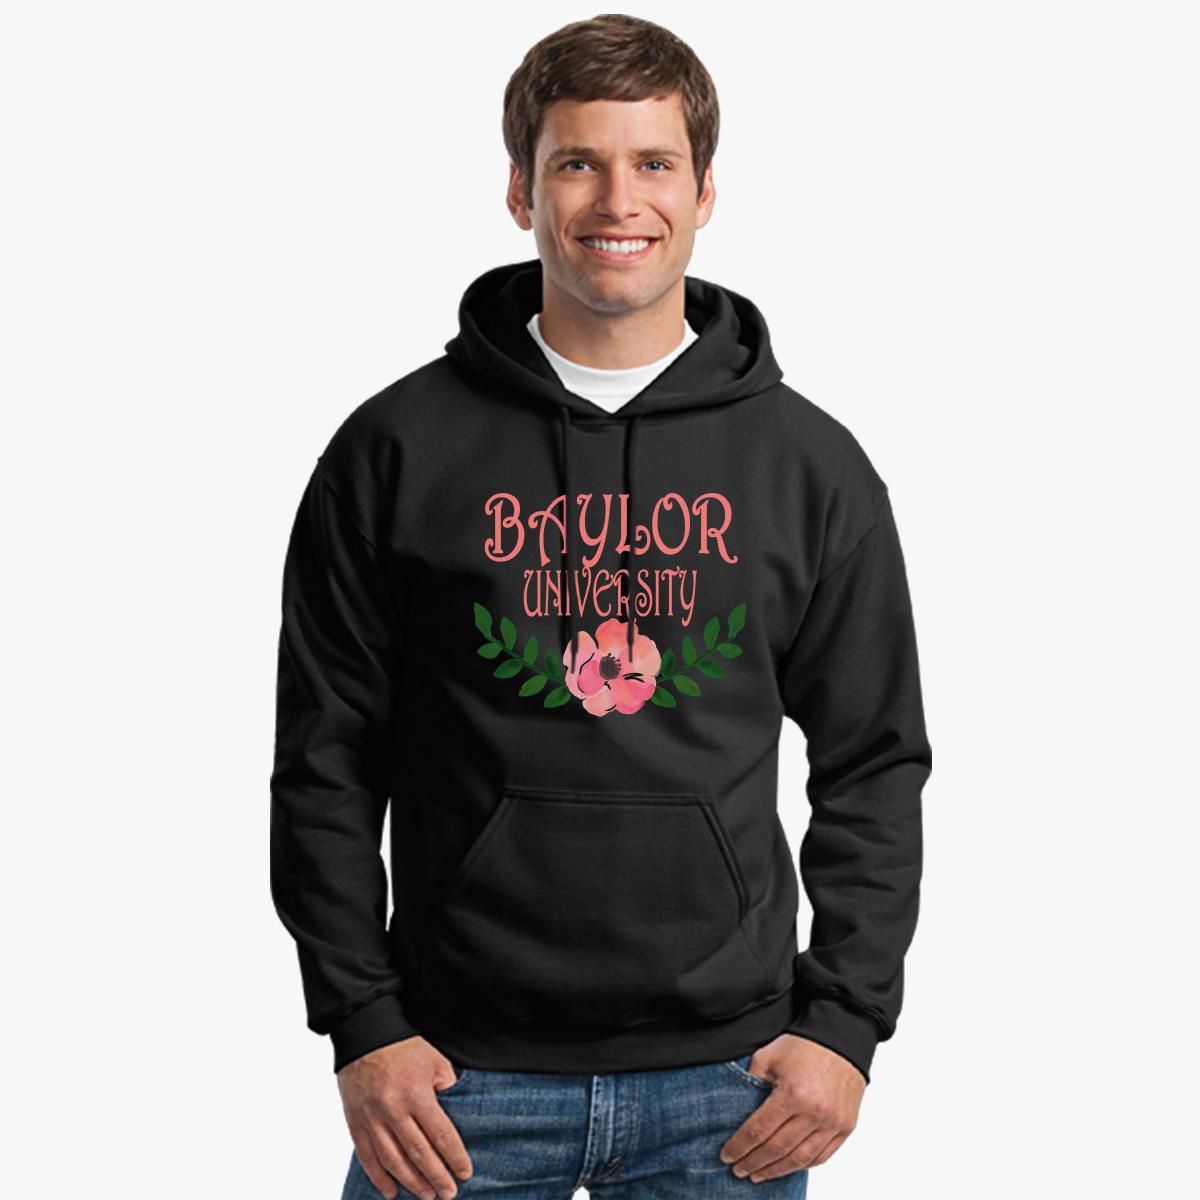 baylor university hoodies